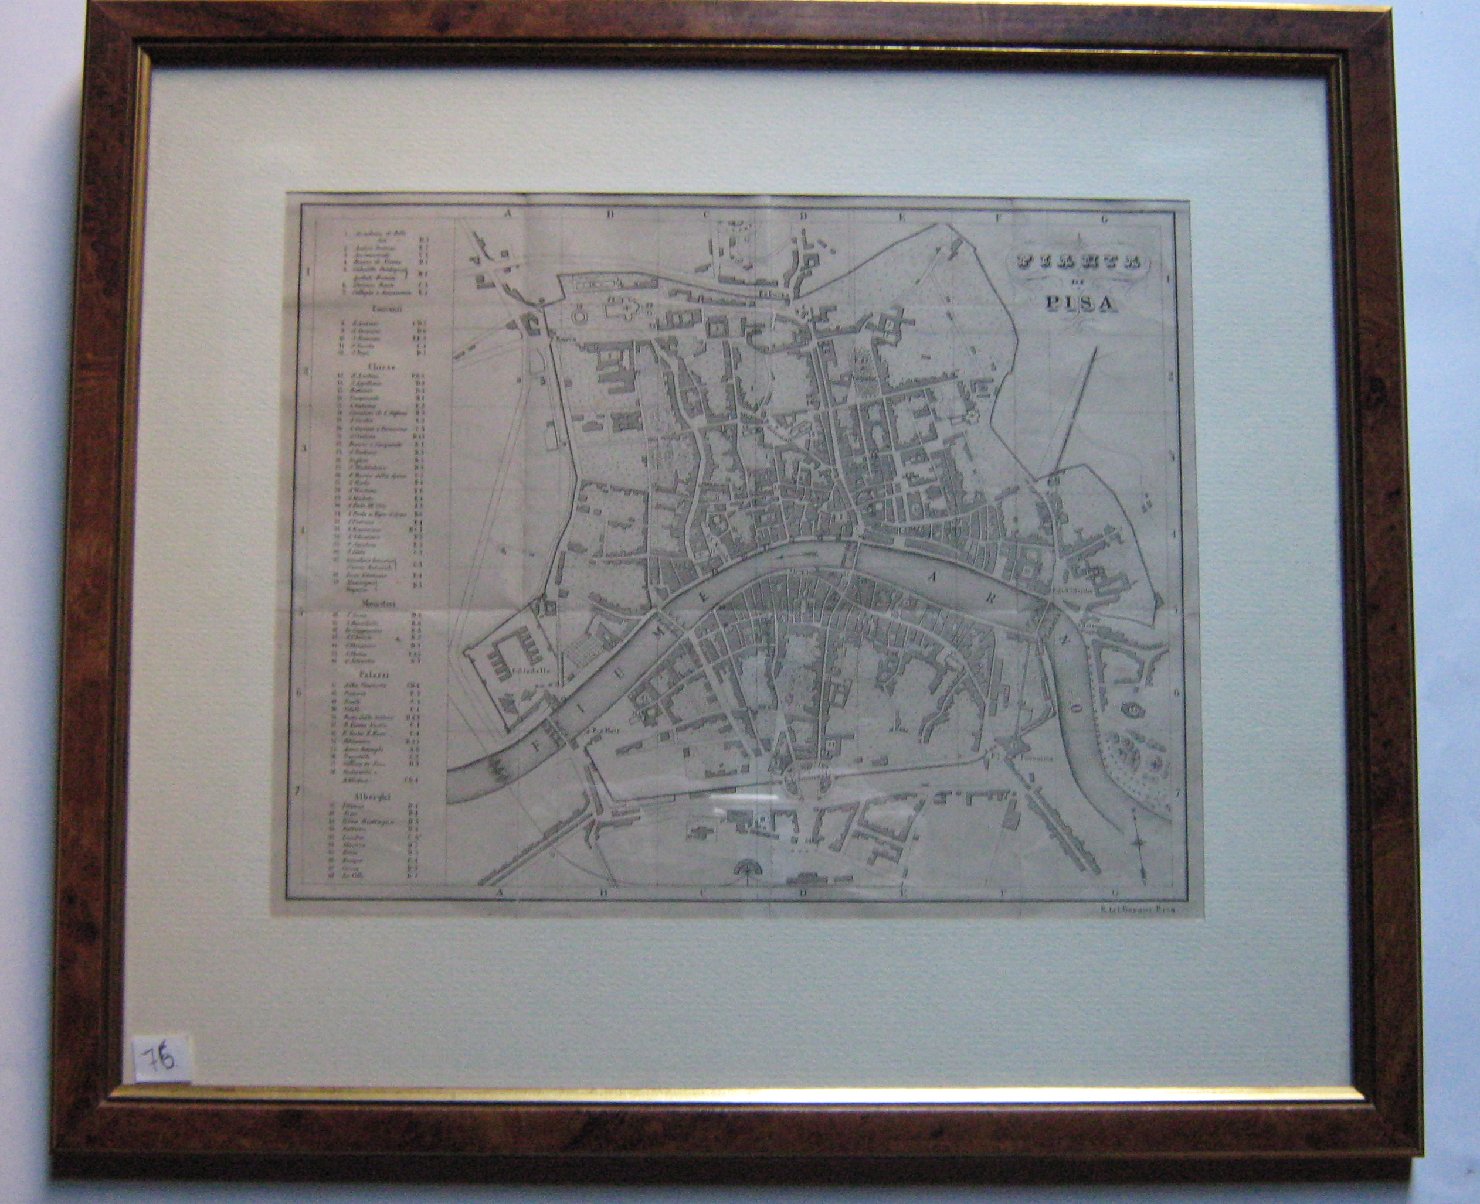 Pianta di Pisa, geografia (stampa, frammento) - ambito italiano (seconda metï¿½ sec. XIX)